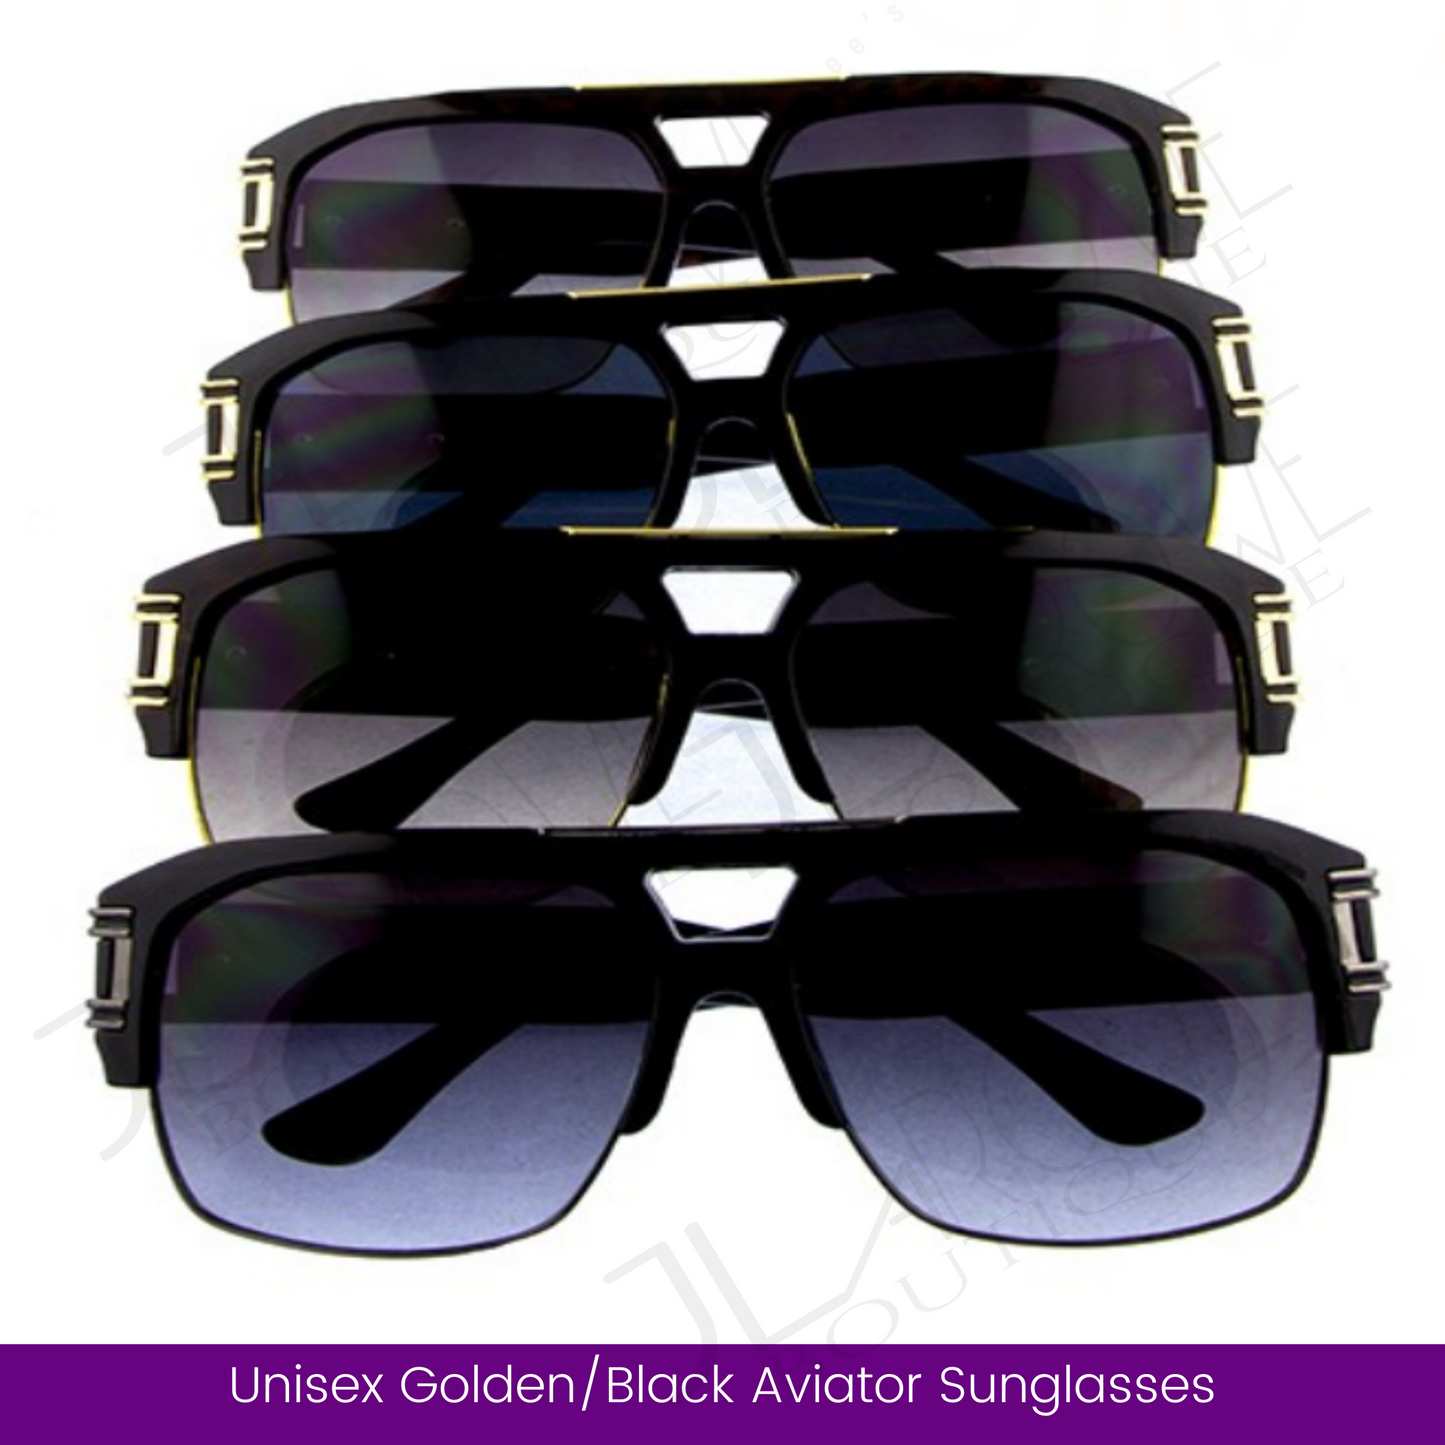 Unisex Golden/Black Aviator Sunglasses